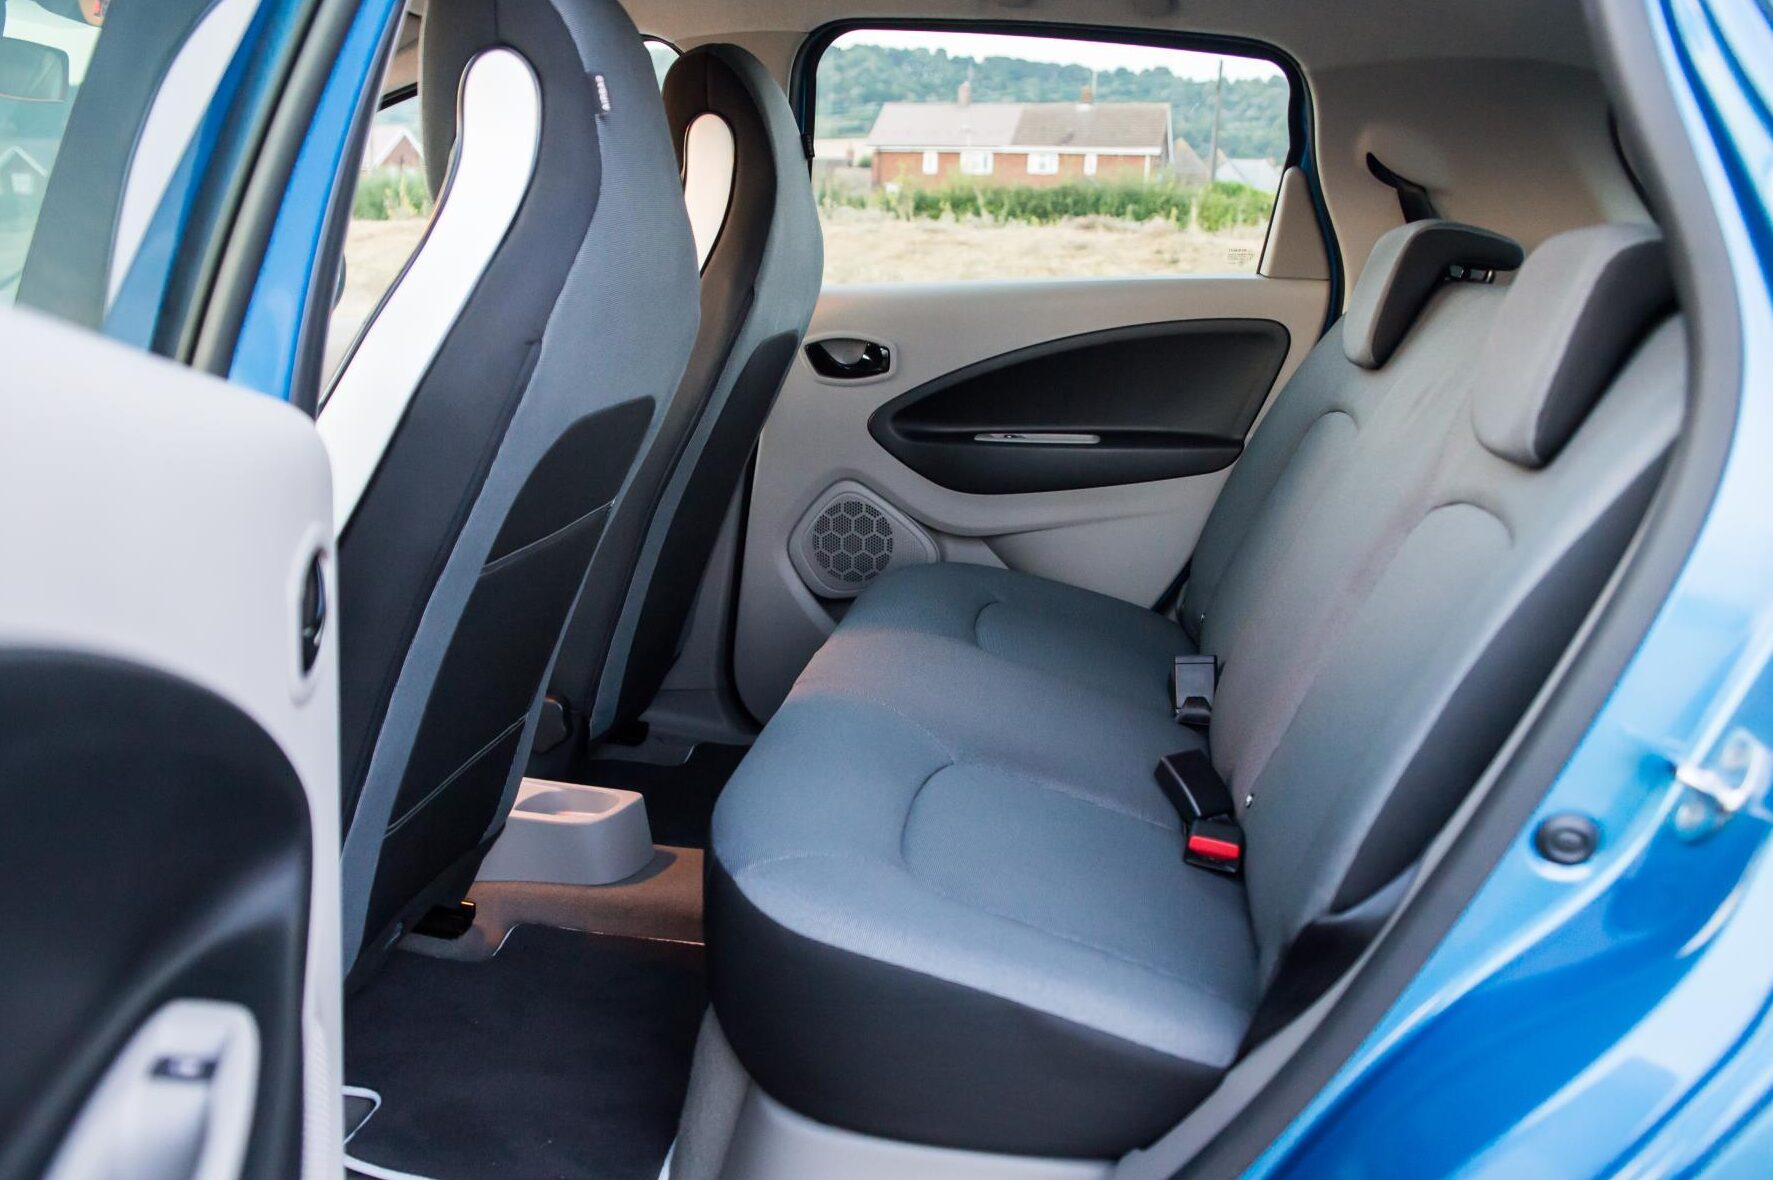 Renault Zoe 2013-2019 rear seats - EVs Unplugged